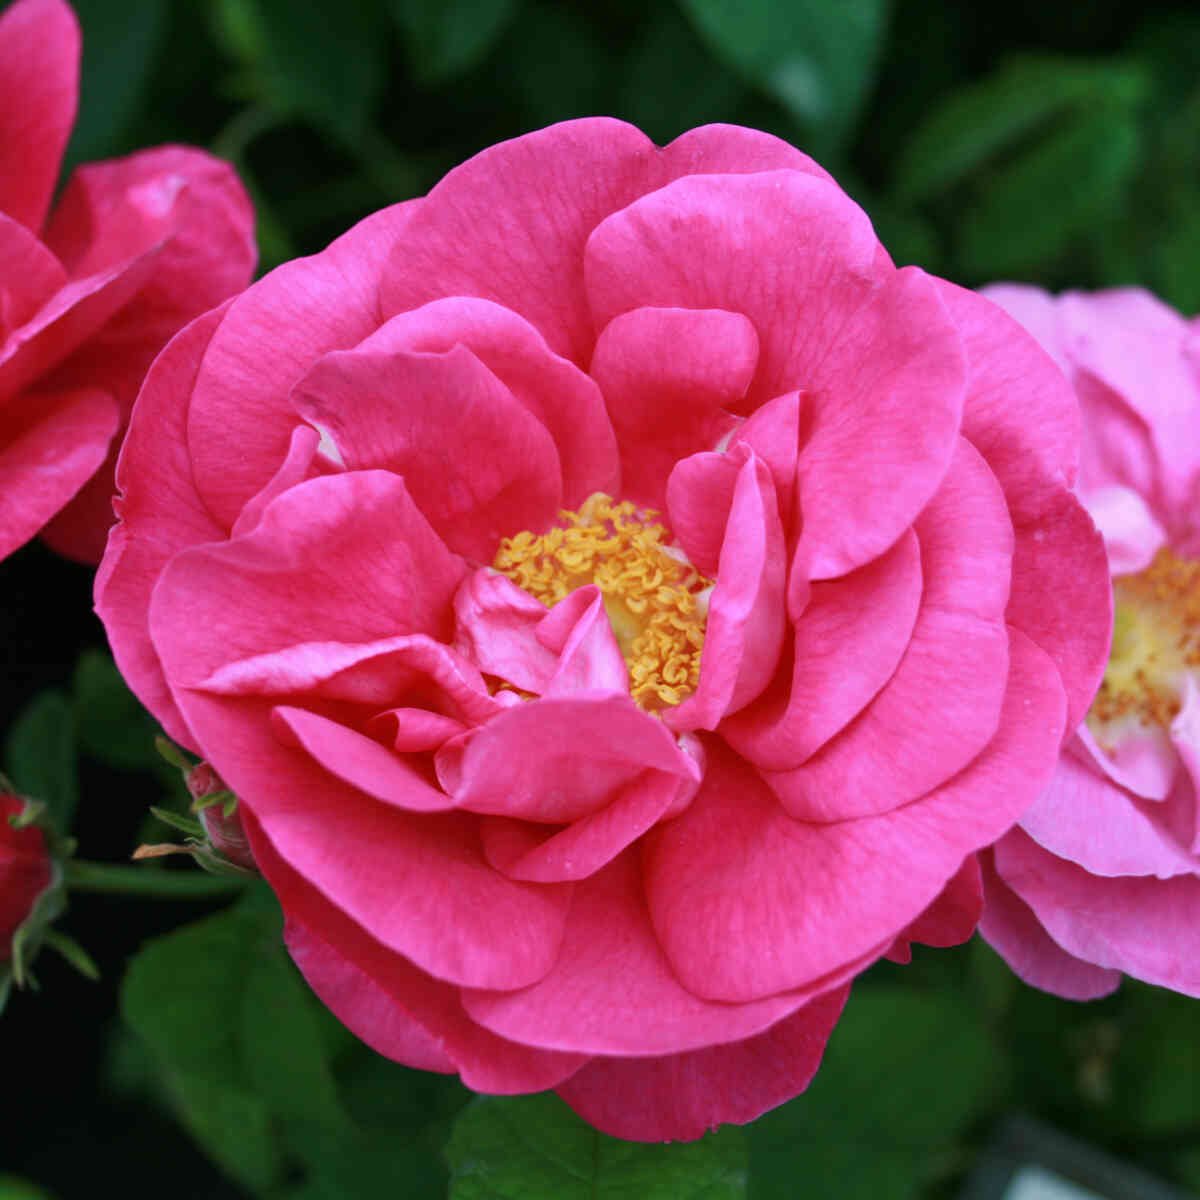 Apotekerrose - Rosa gallica 'Officinalis'